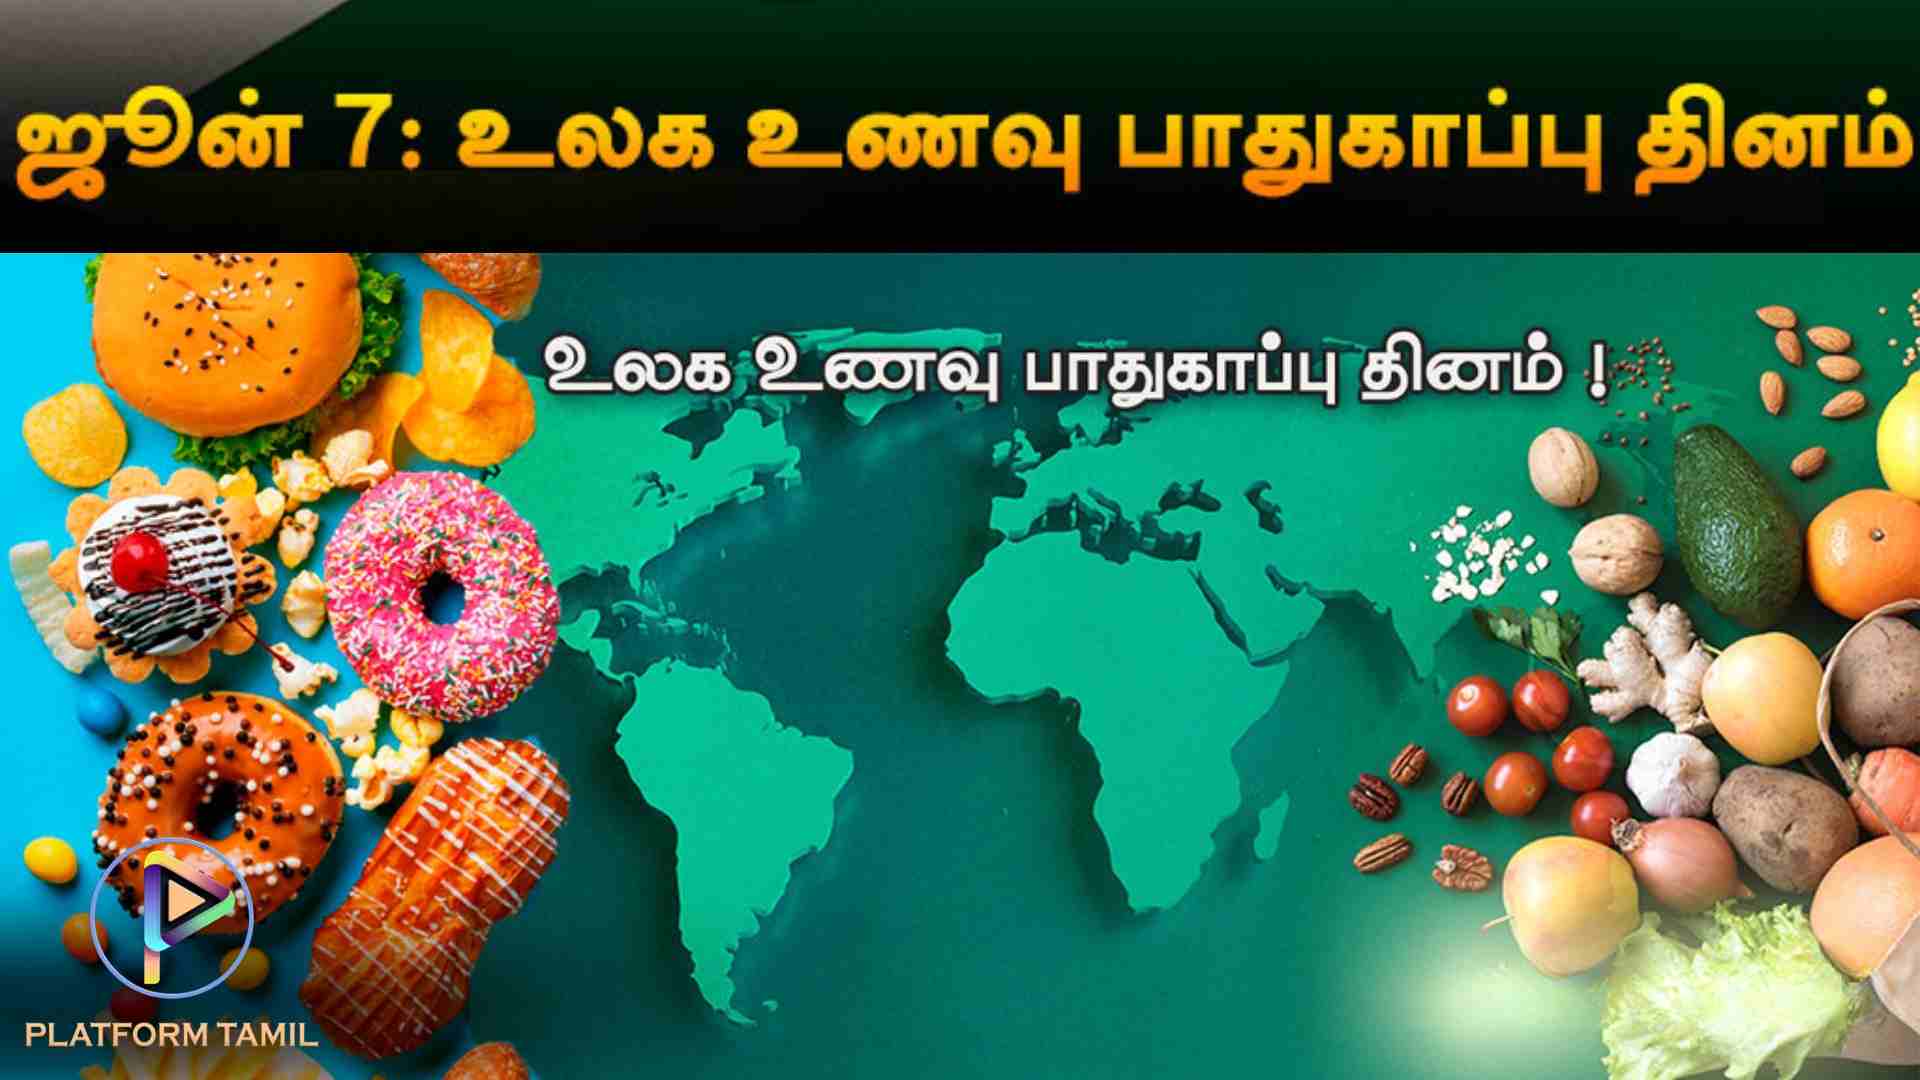 Food Safety Day - Platform tamil